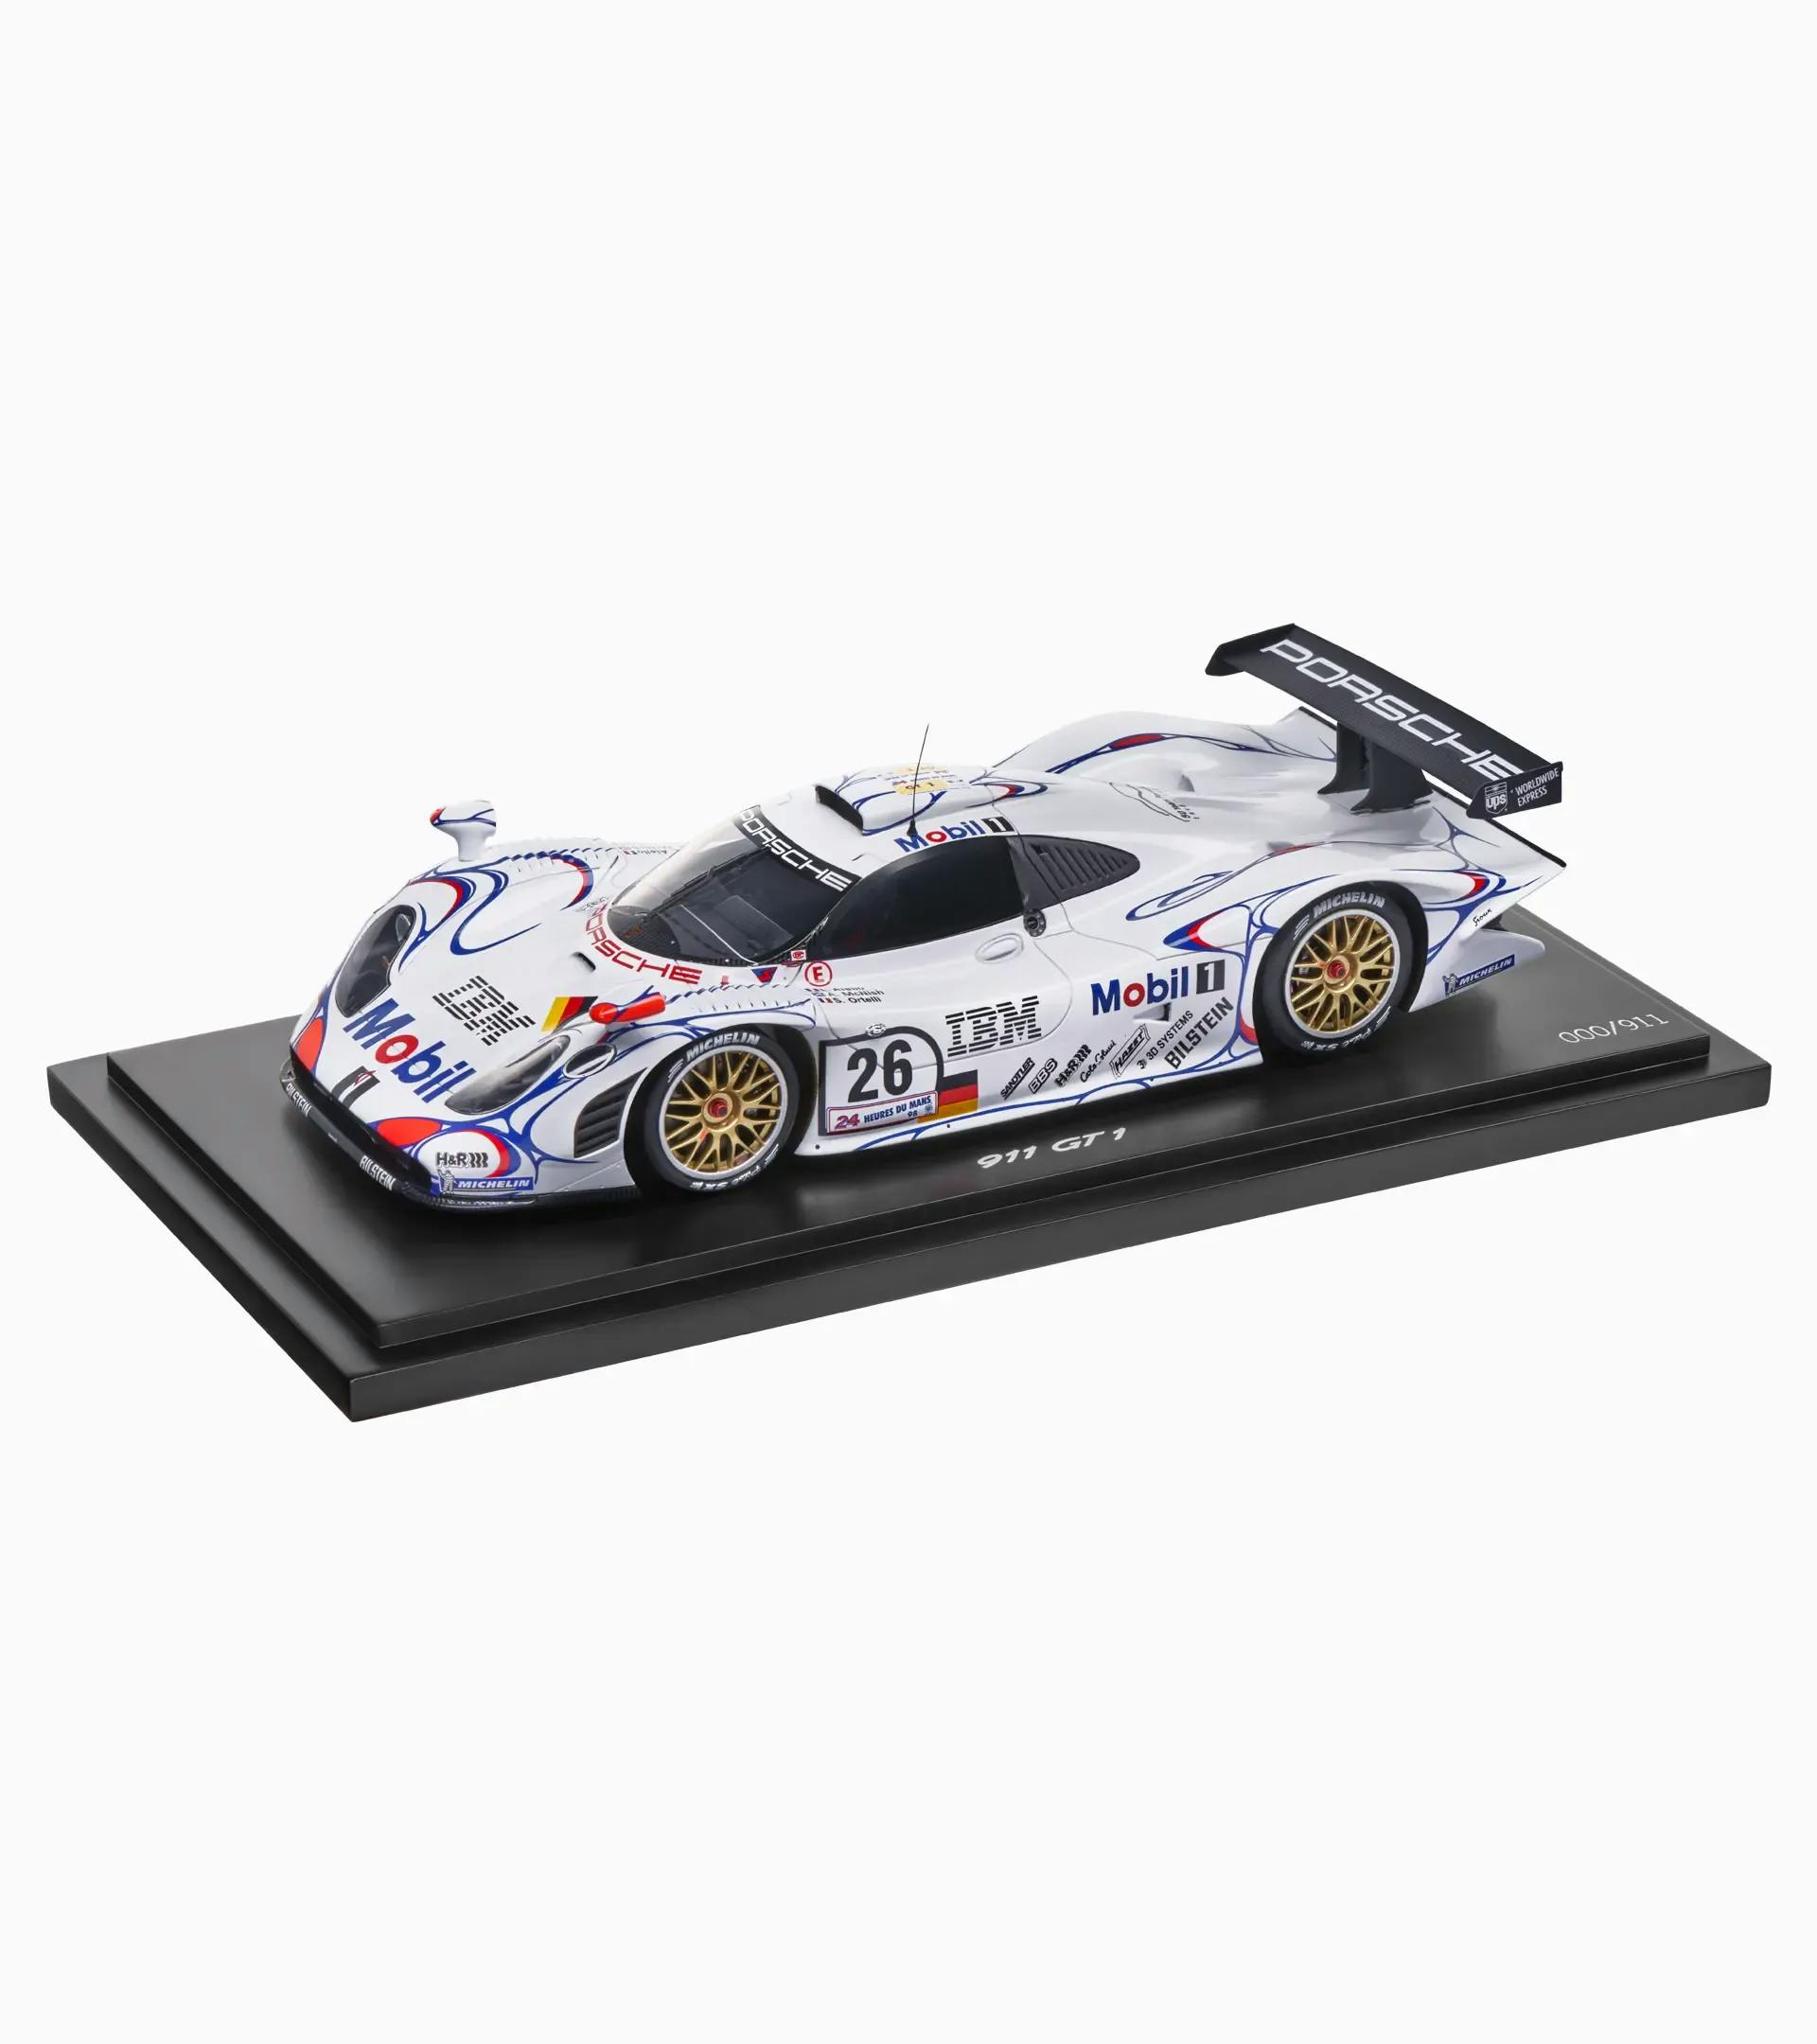 Porsche 911 GT1'98 vincitrice della 24h di Le Mans 1998 – Ltd.  1